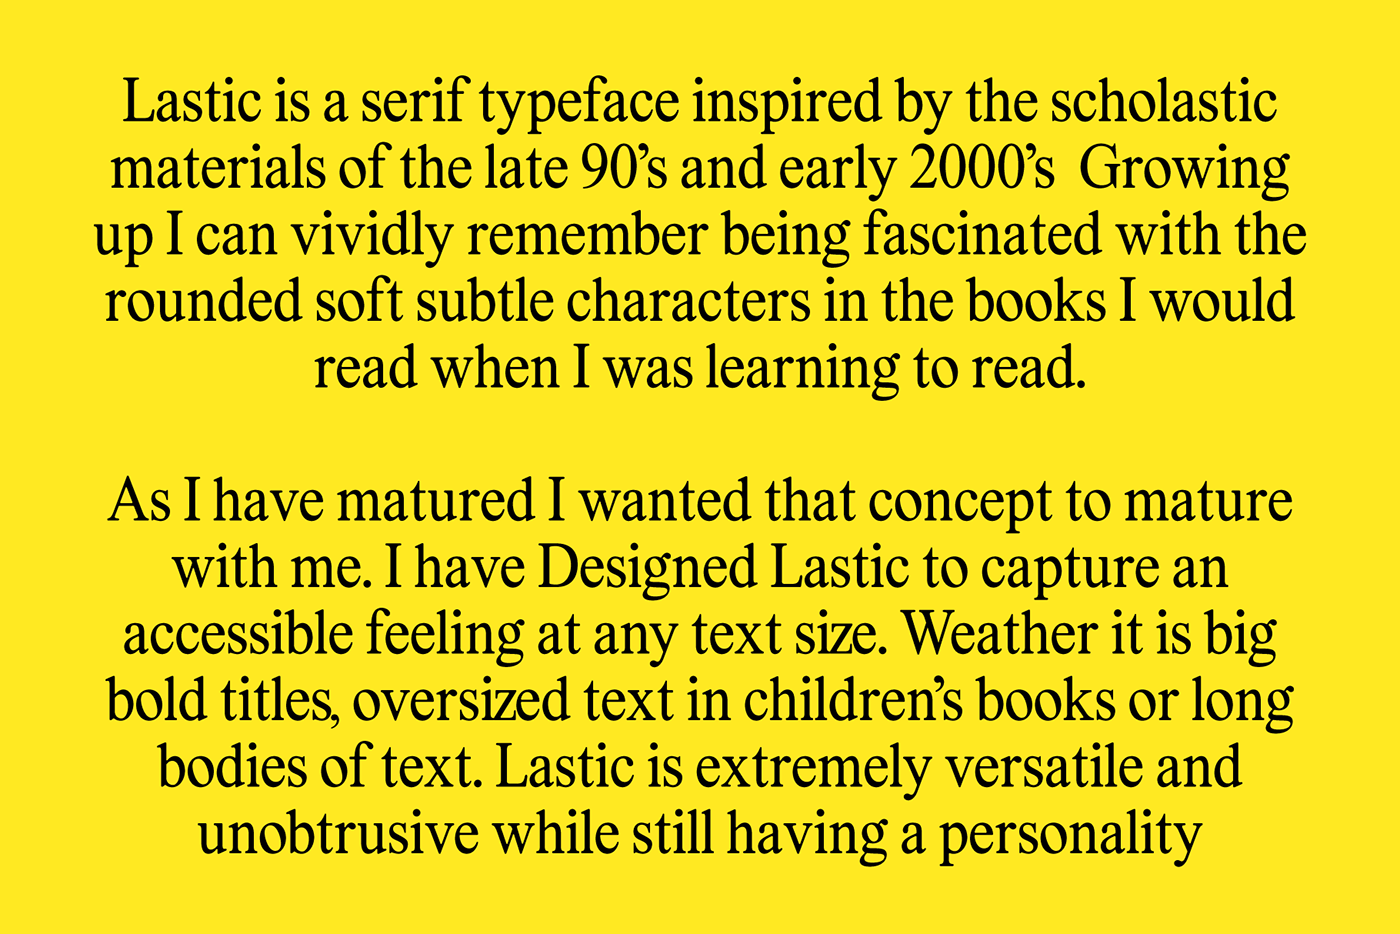 a description of the inspiration of 90s scholastic materials